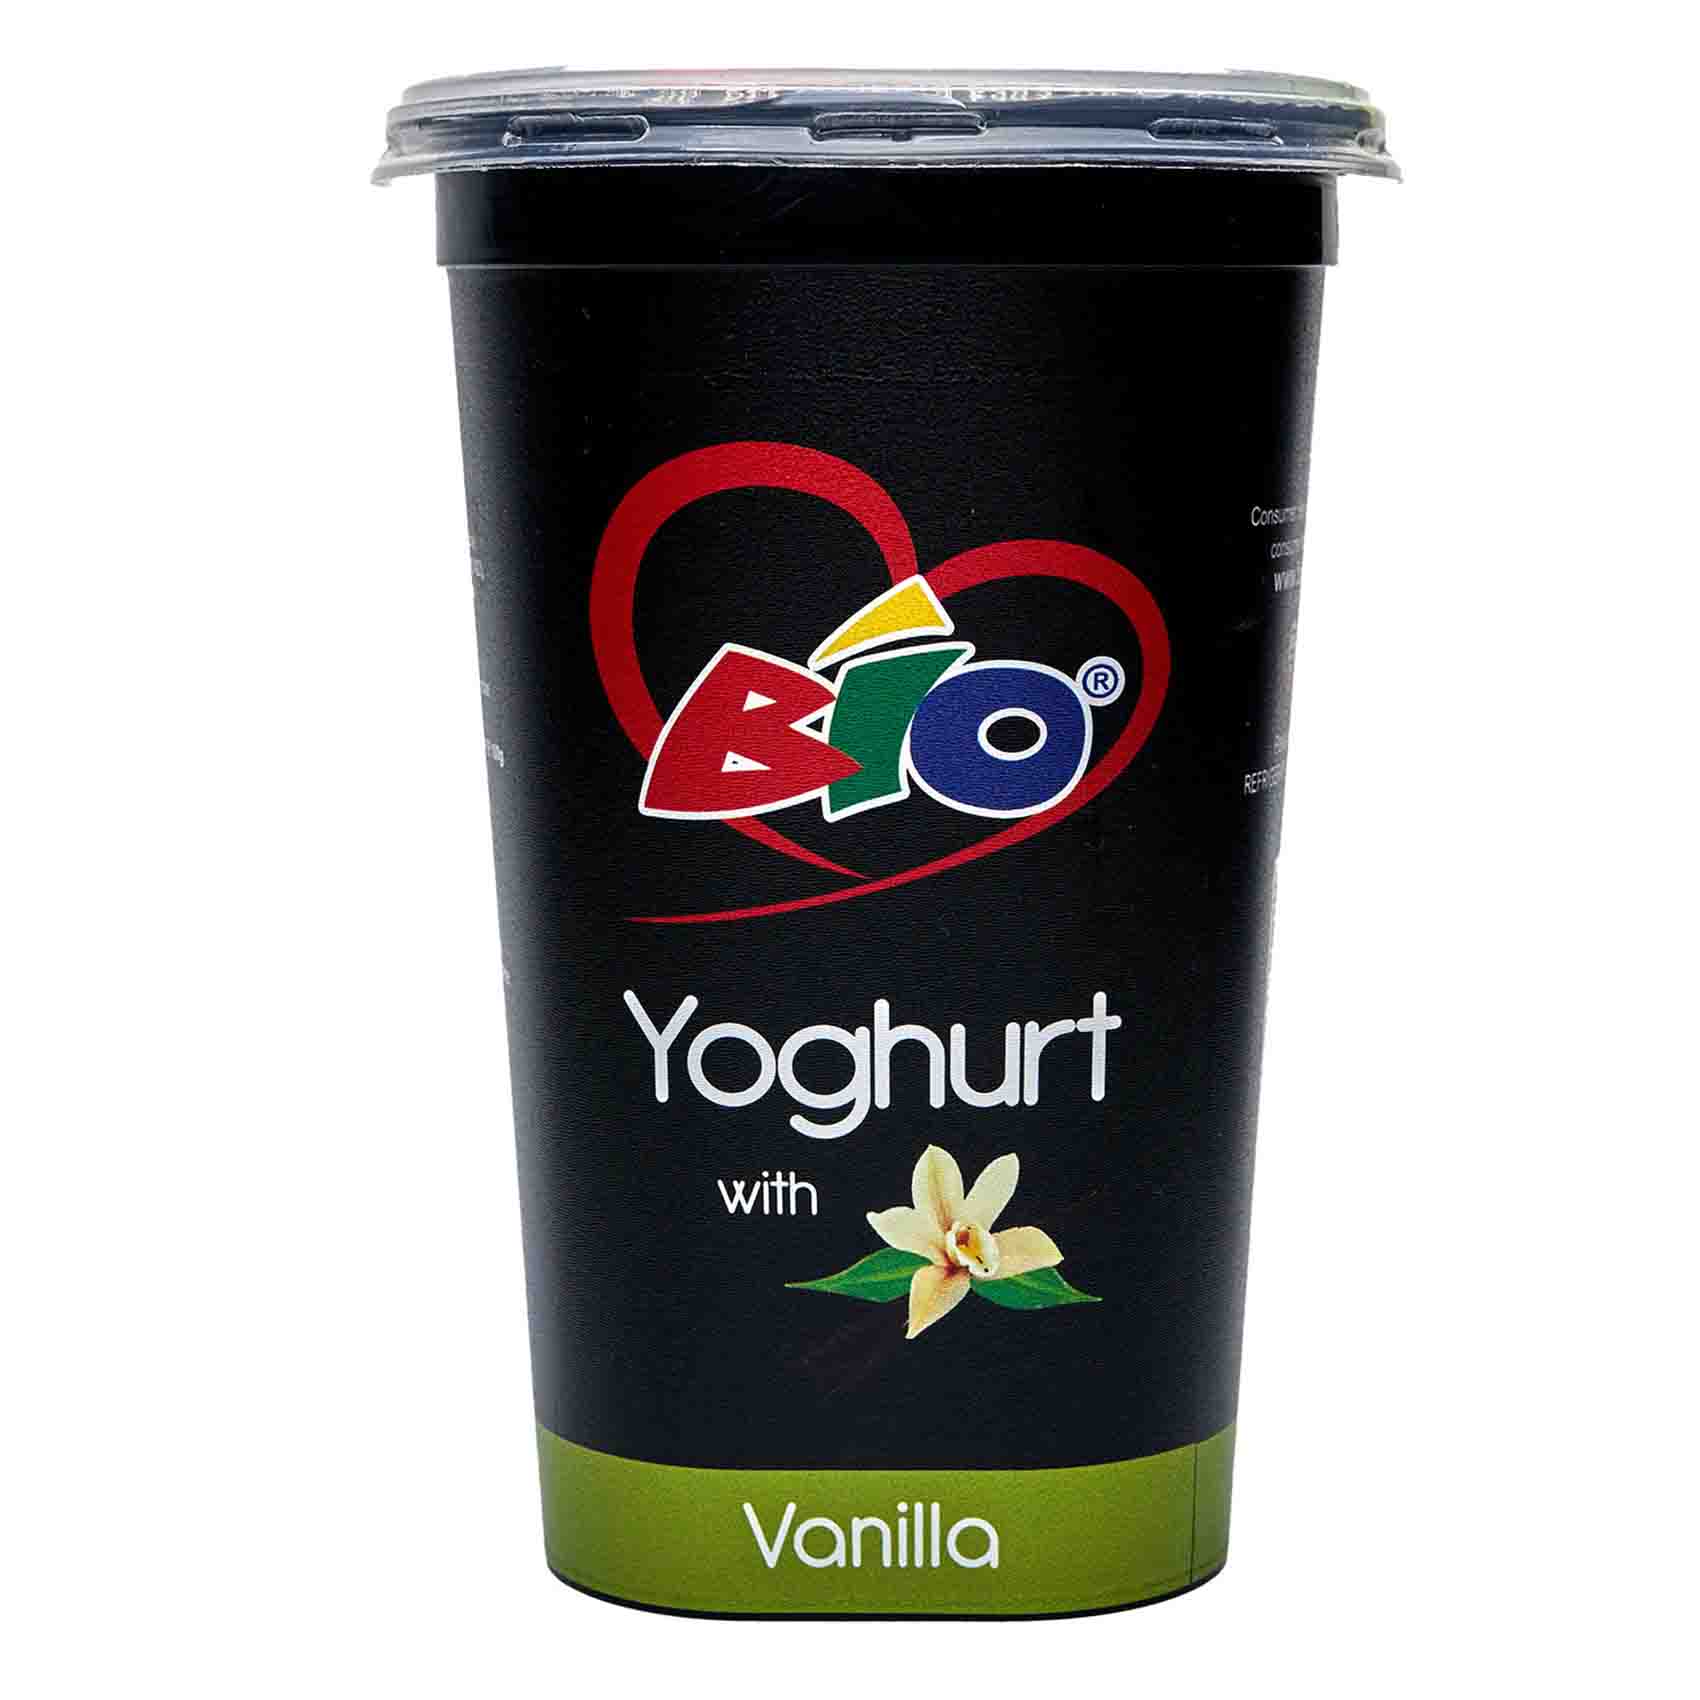 Bio Vanilla Yoghurt 450ml